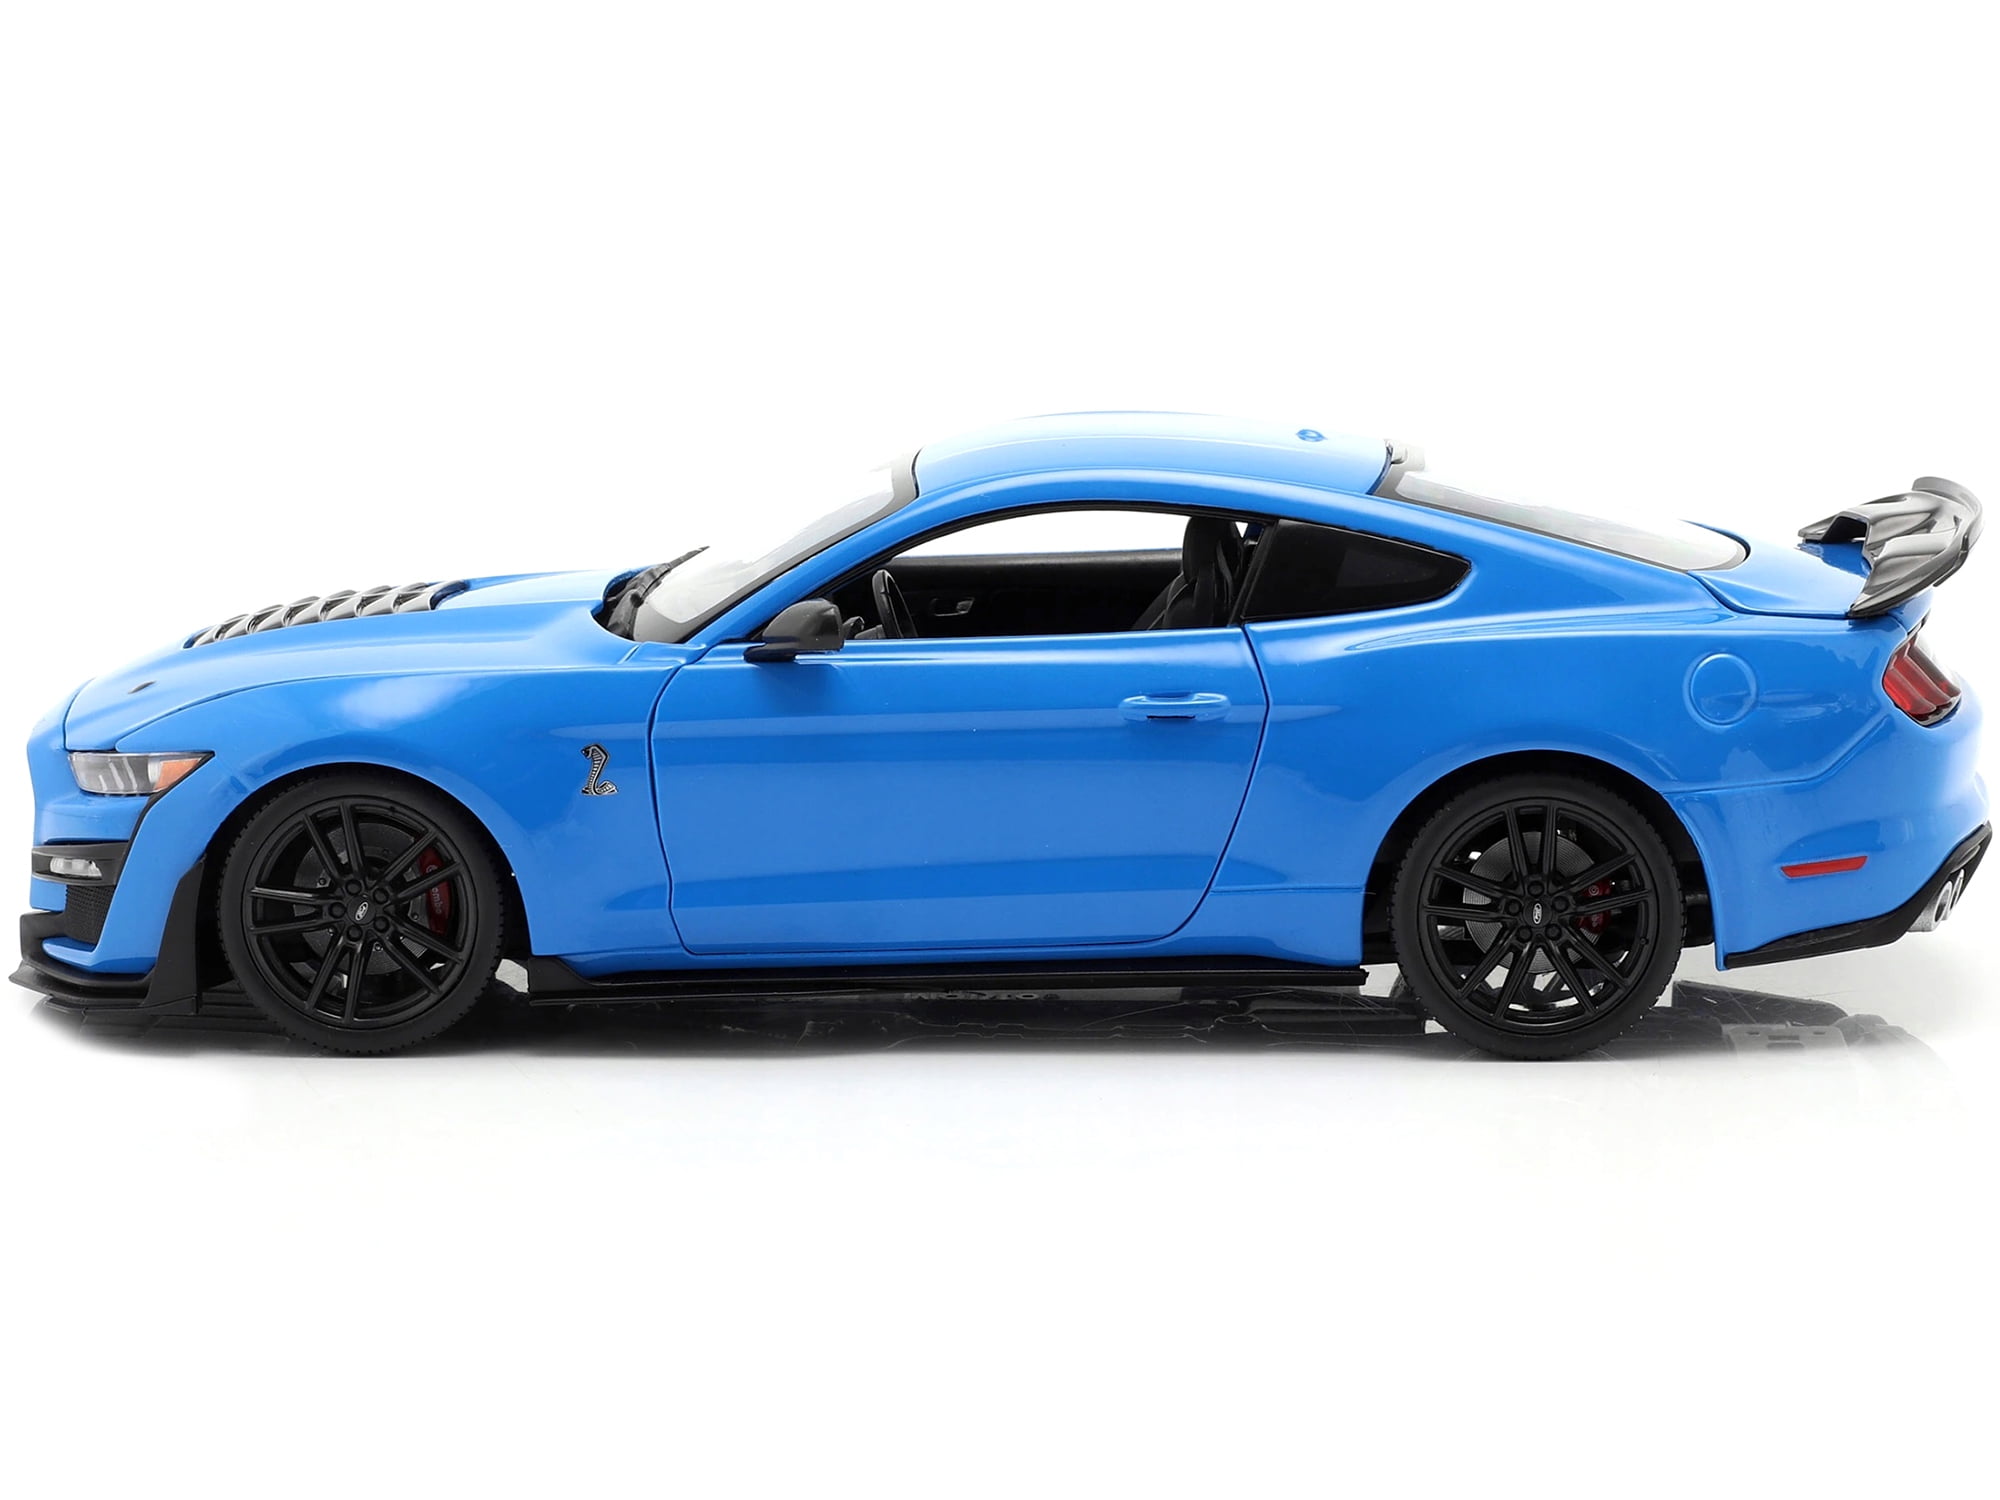 Maisto 31452bl 1-18 Diecast Model Car for 2020 Ford Mustang Shelby GT500  Light Blue Special E, 1 - City Market